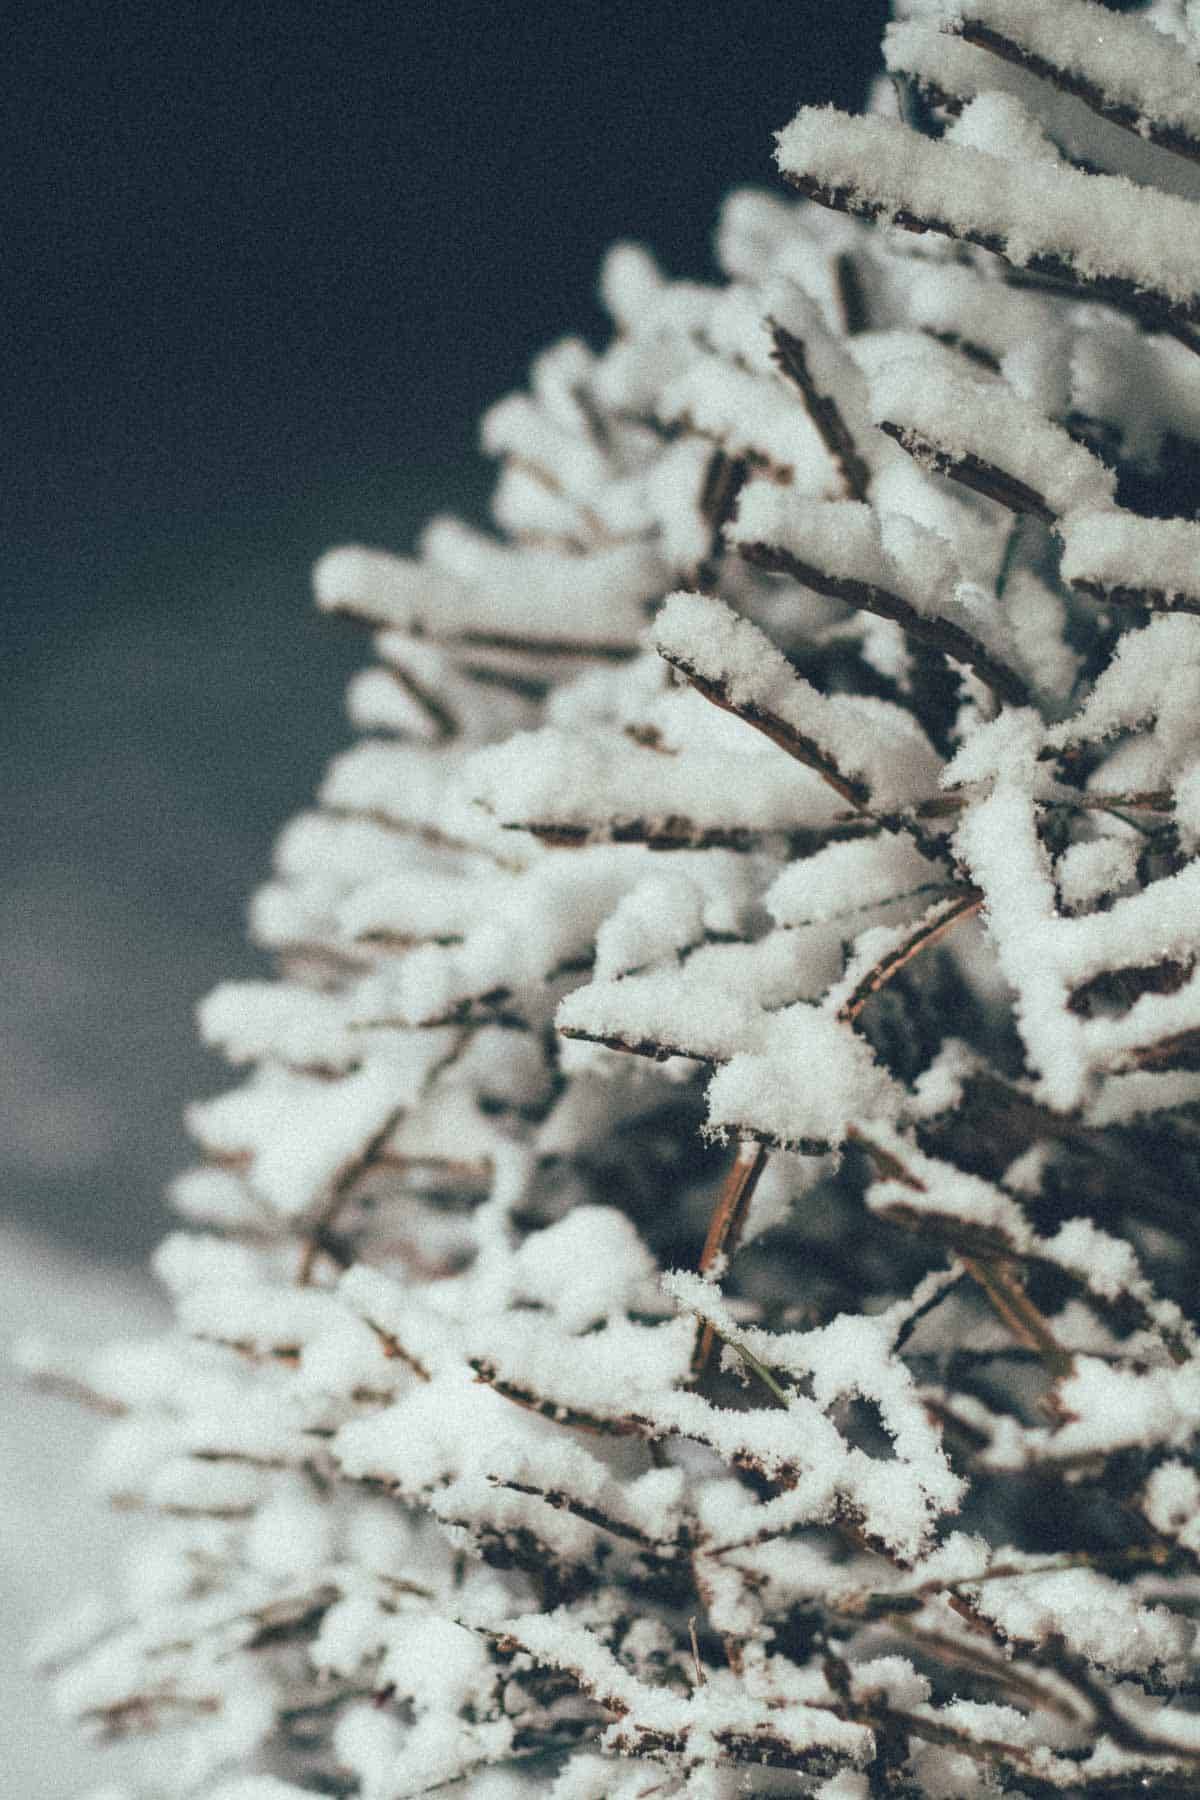 Snow on a bush.